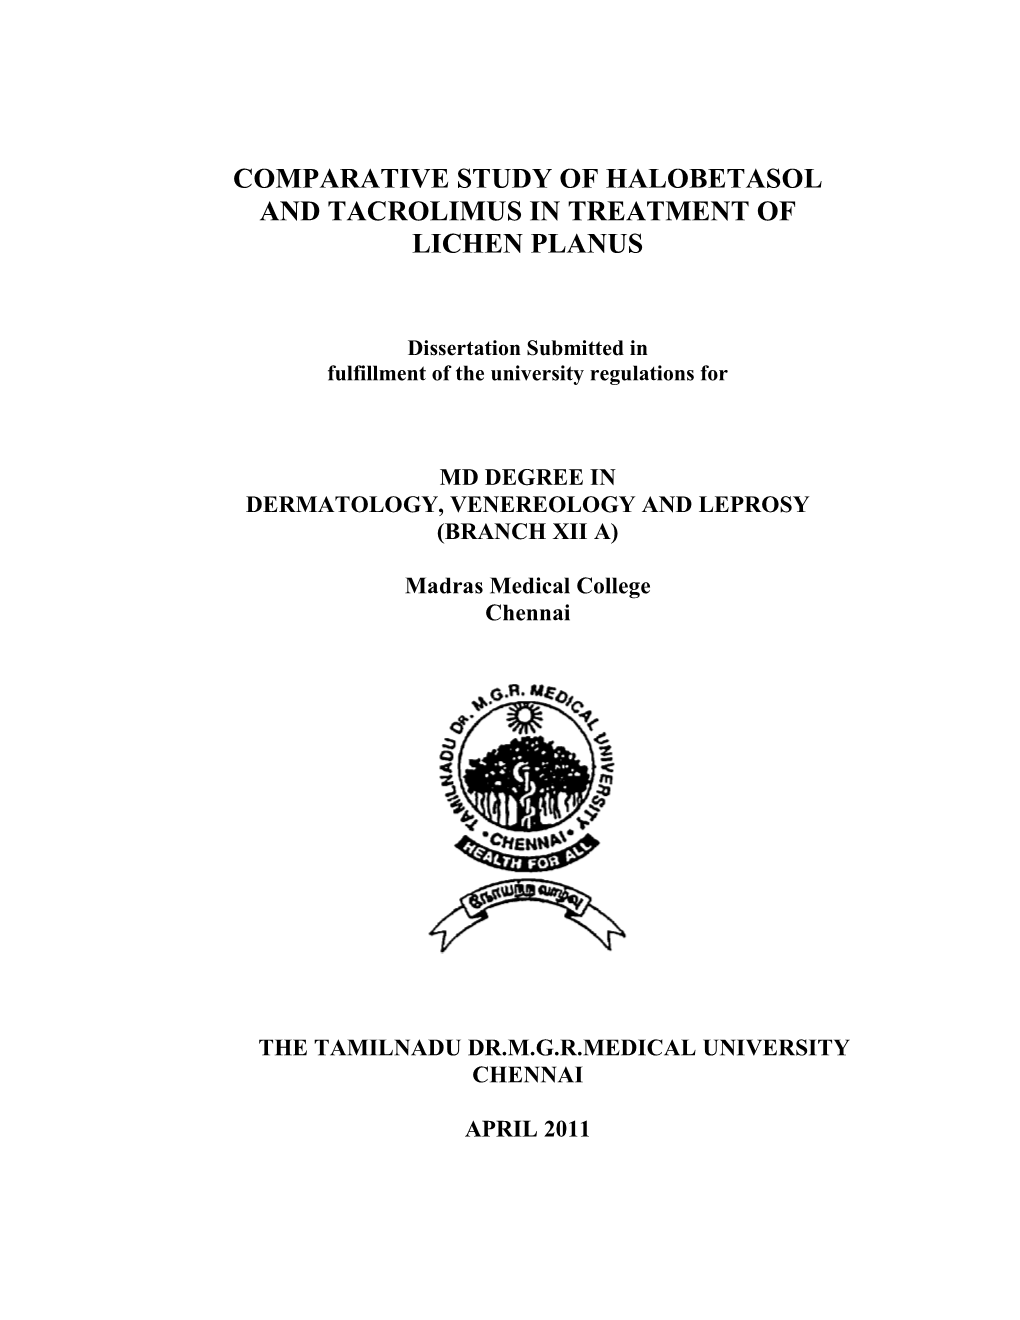 Comparative Study of Halobetasol and Tacrolimus in Treatment of Lichen Planus